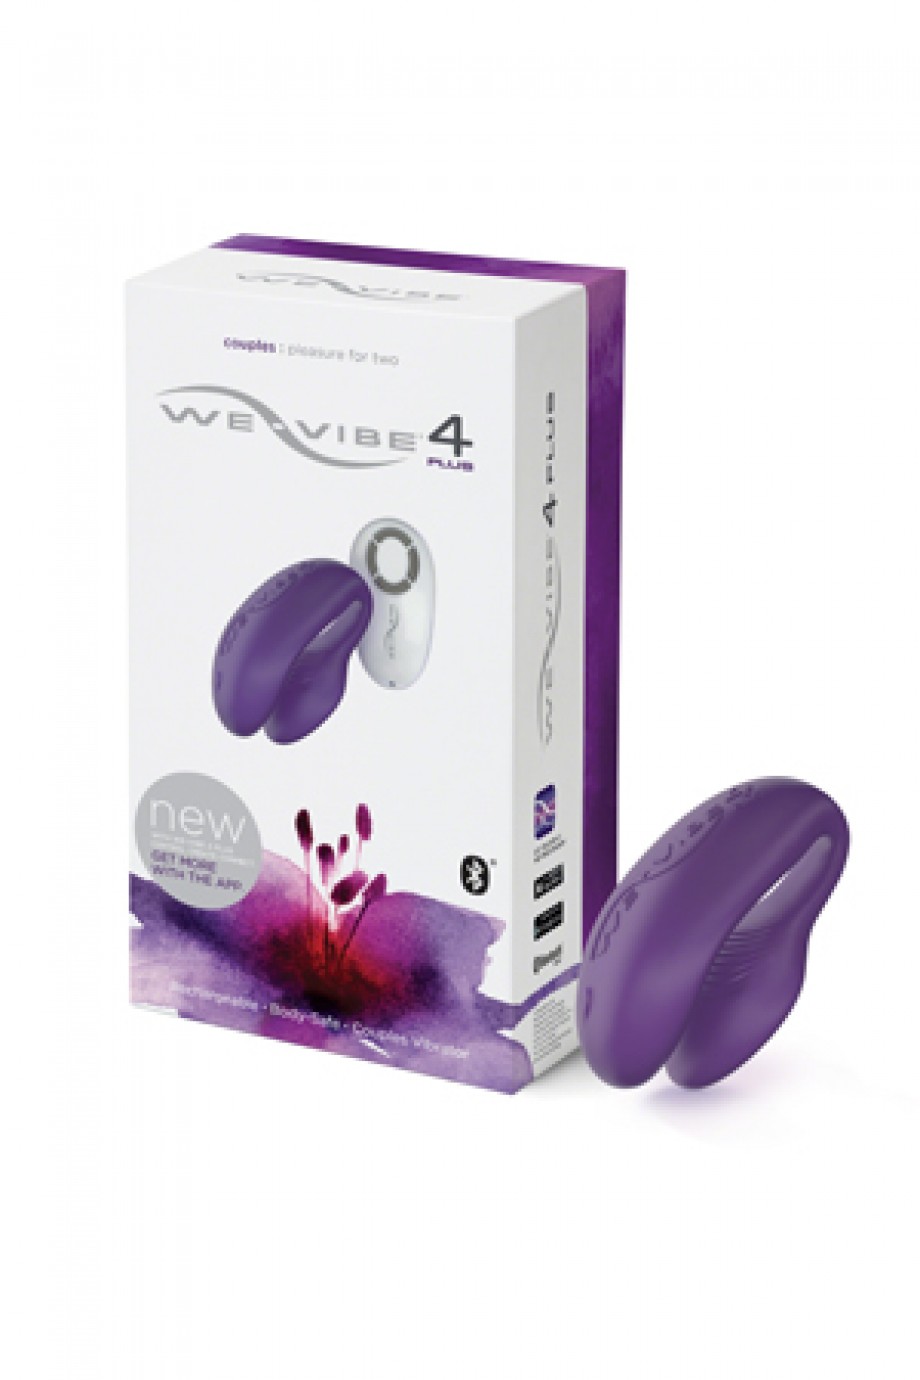 Вибратор для пар WE-Vibe 4 Plus, фиолетовый